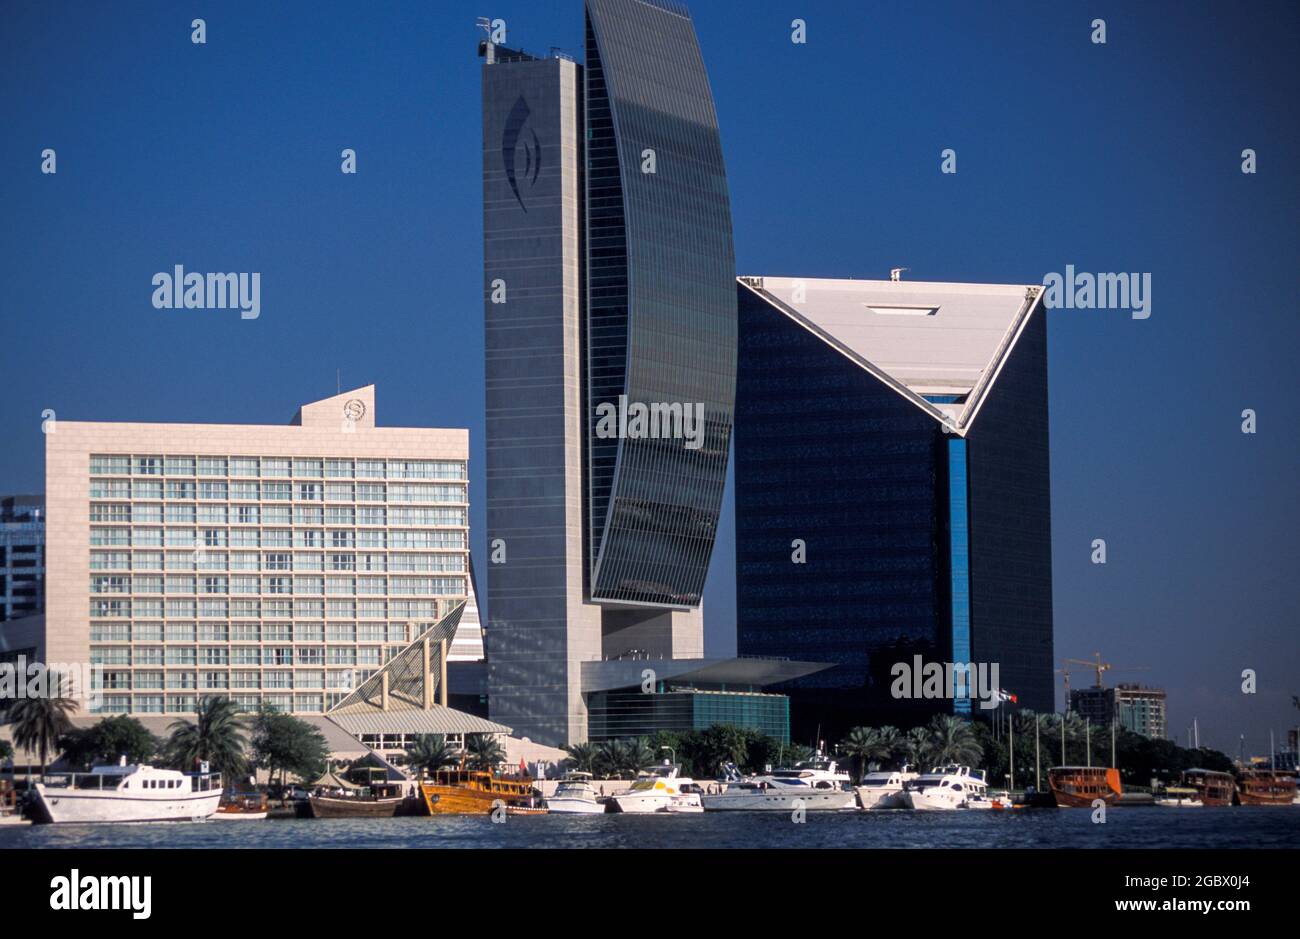 Emirates NBD headquarters building in Deira, Abra boat ride across the Dubai Creek, Dubai, United Arab Emirates Stock Photo